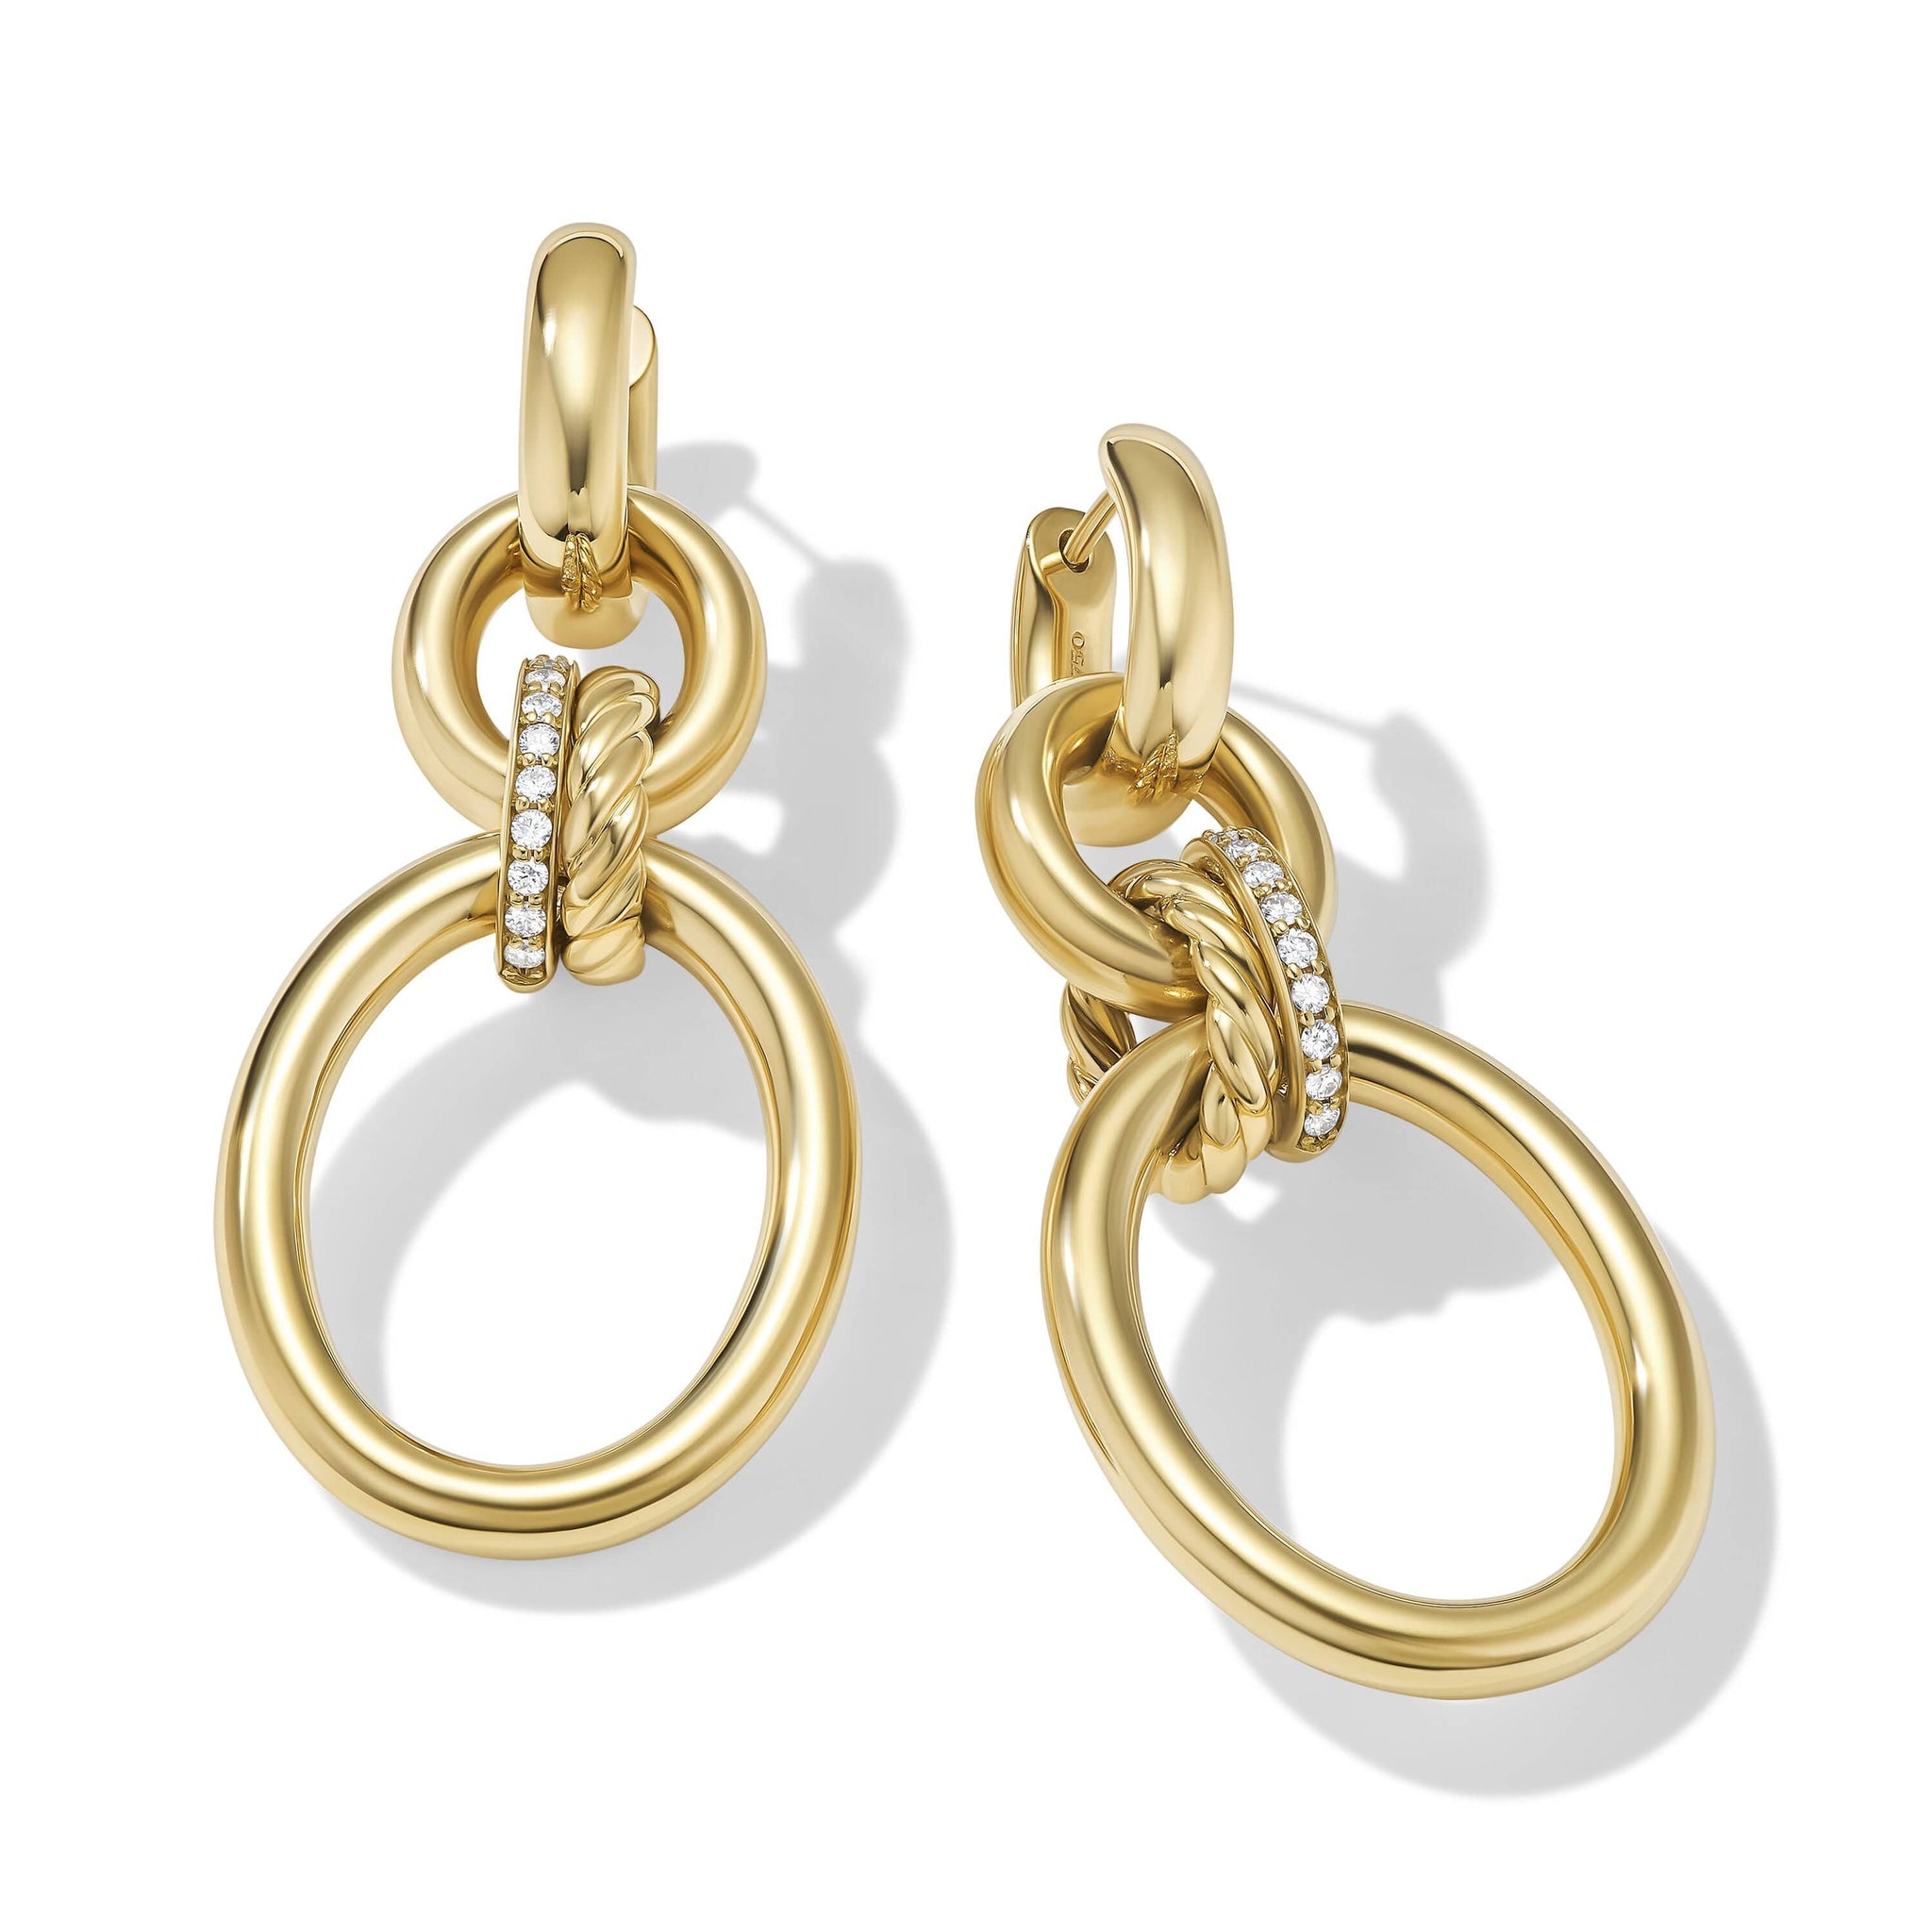 DY Mercer™ Circular Drop Earrings in 18K Yellow Gold with Pavé Diamonds